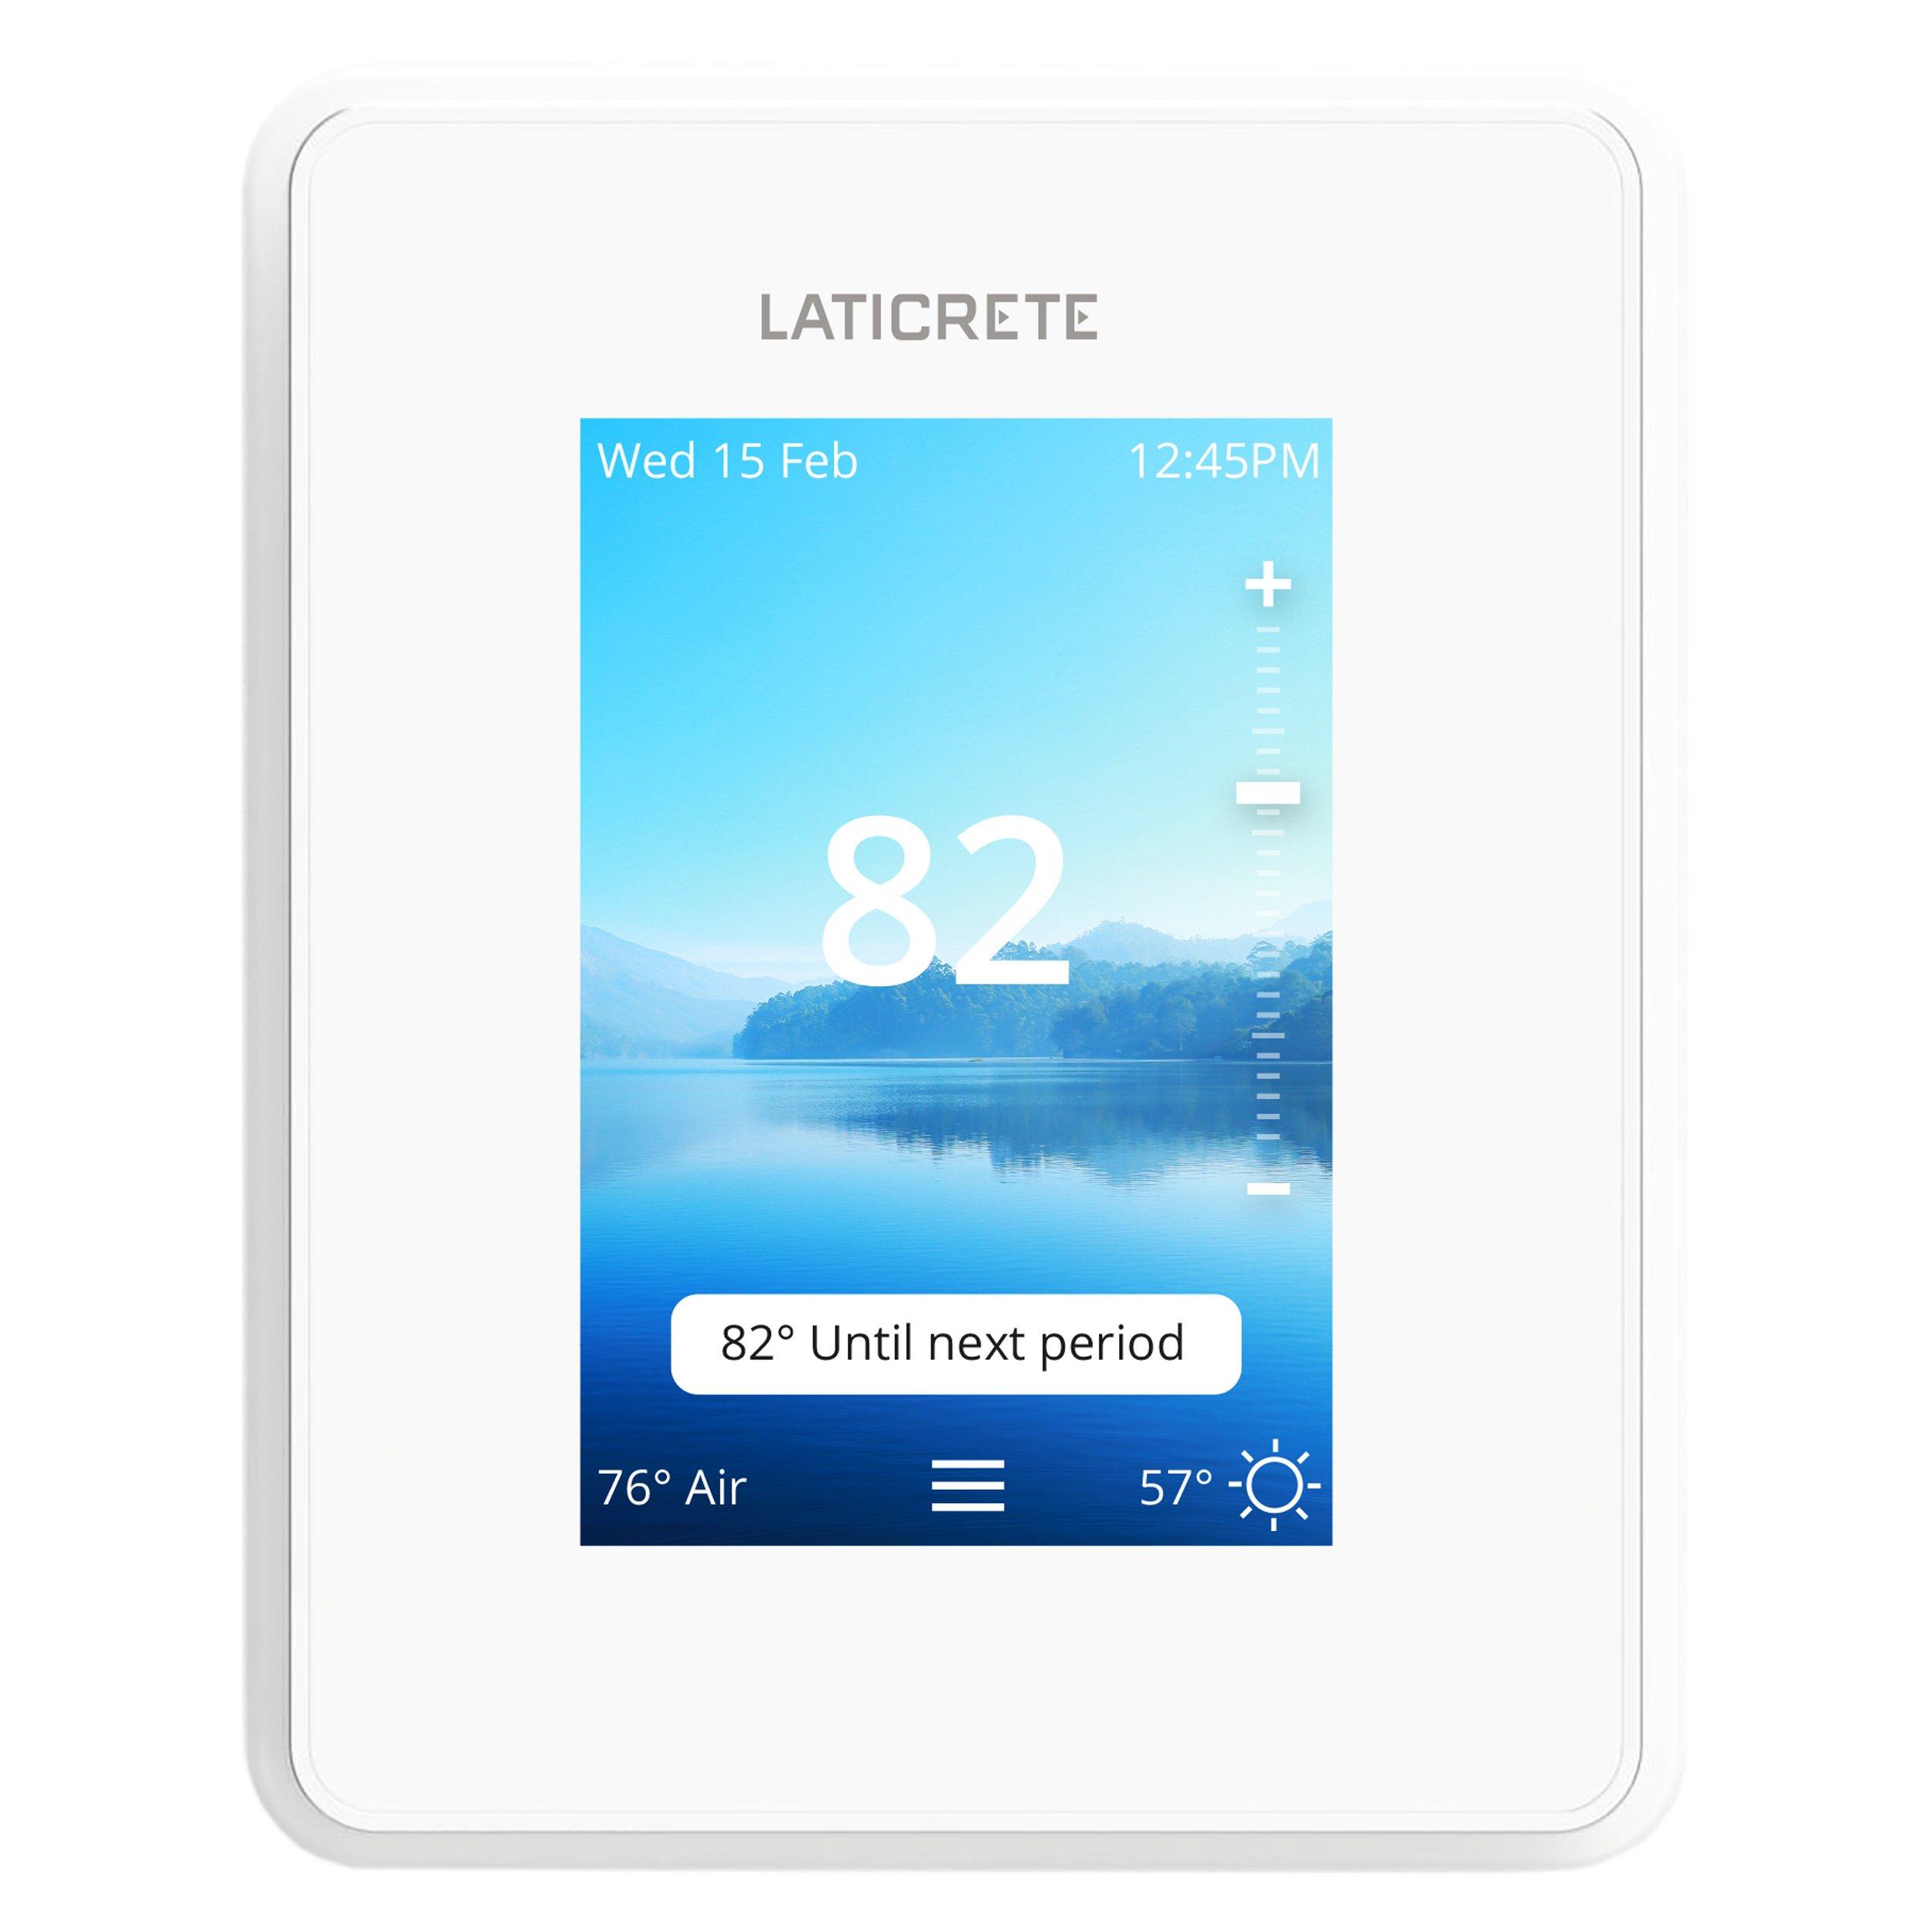 Laticrete Strata Heat Smart Wi-Fi Thermostat